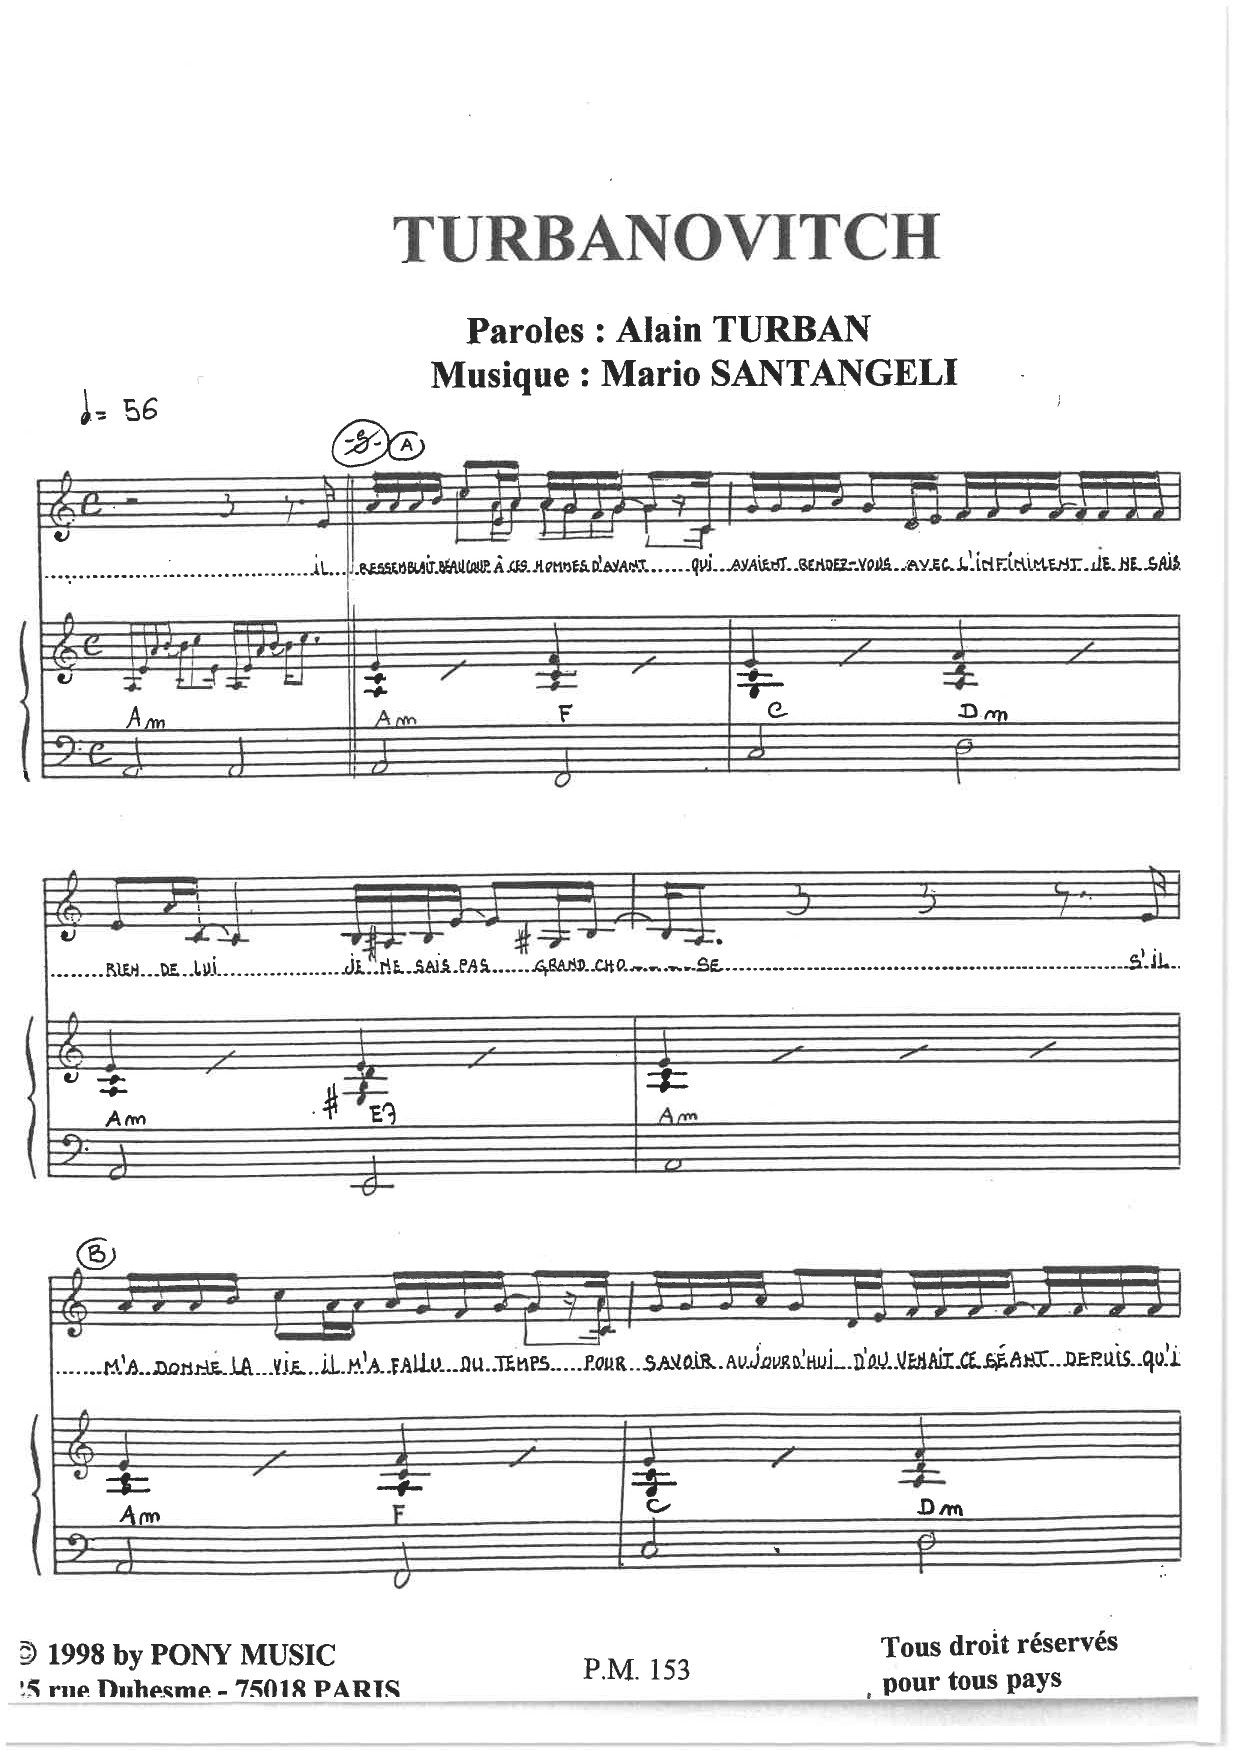 Download Alain Turban and Mario Santangeli Turbanovitch Sheet Music